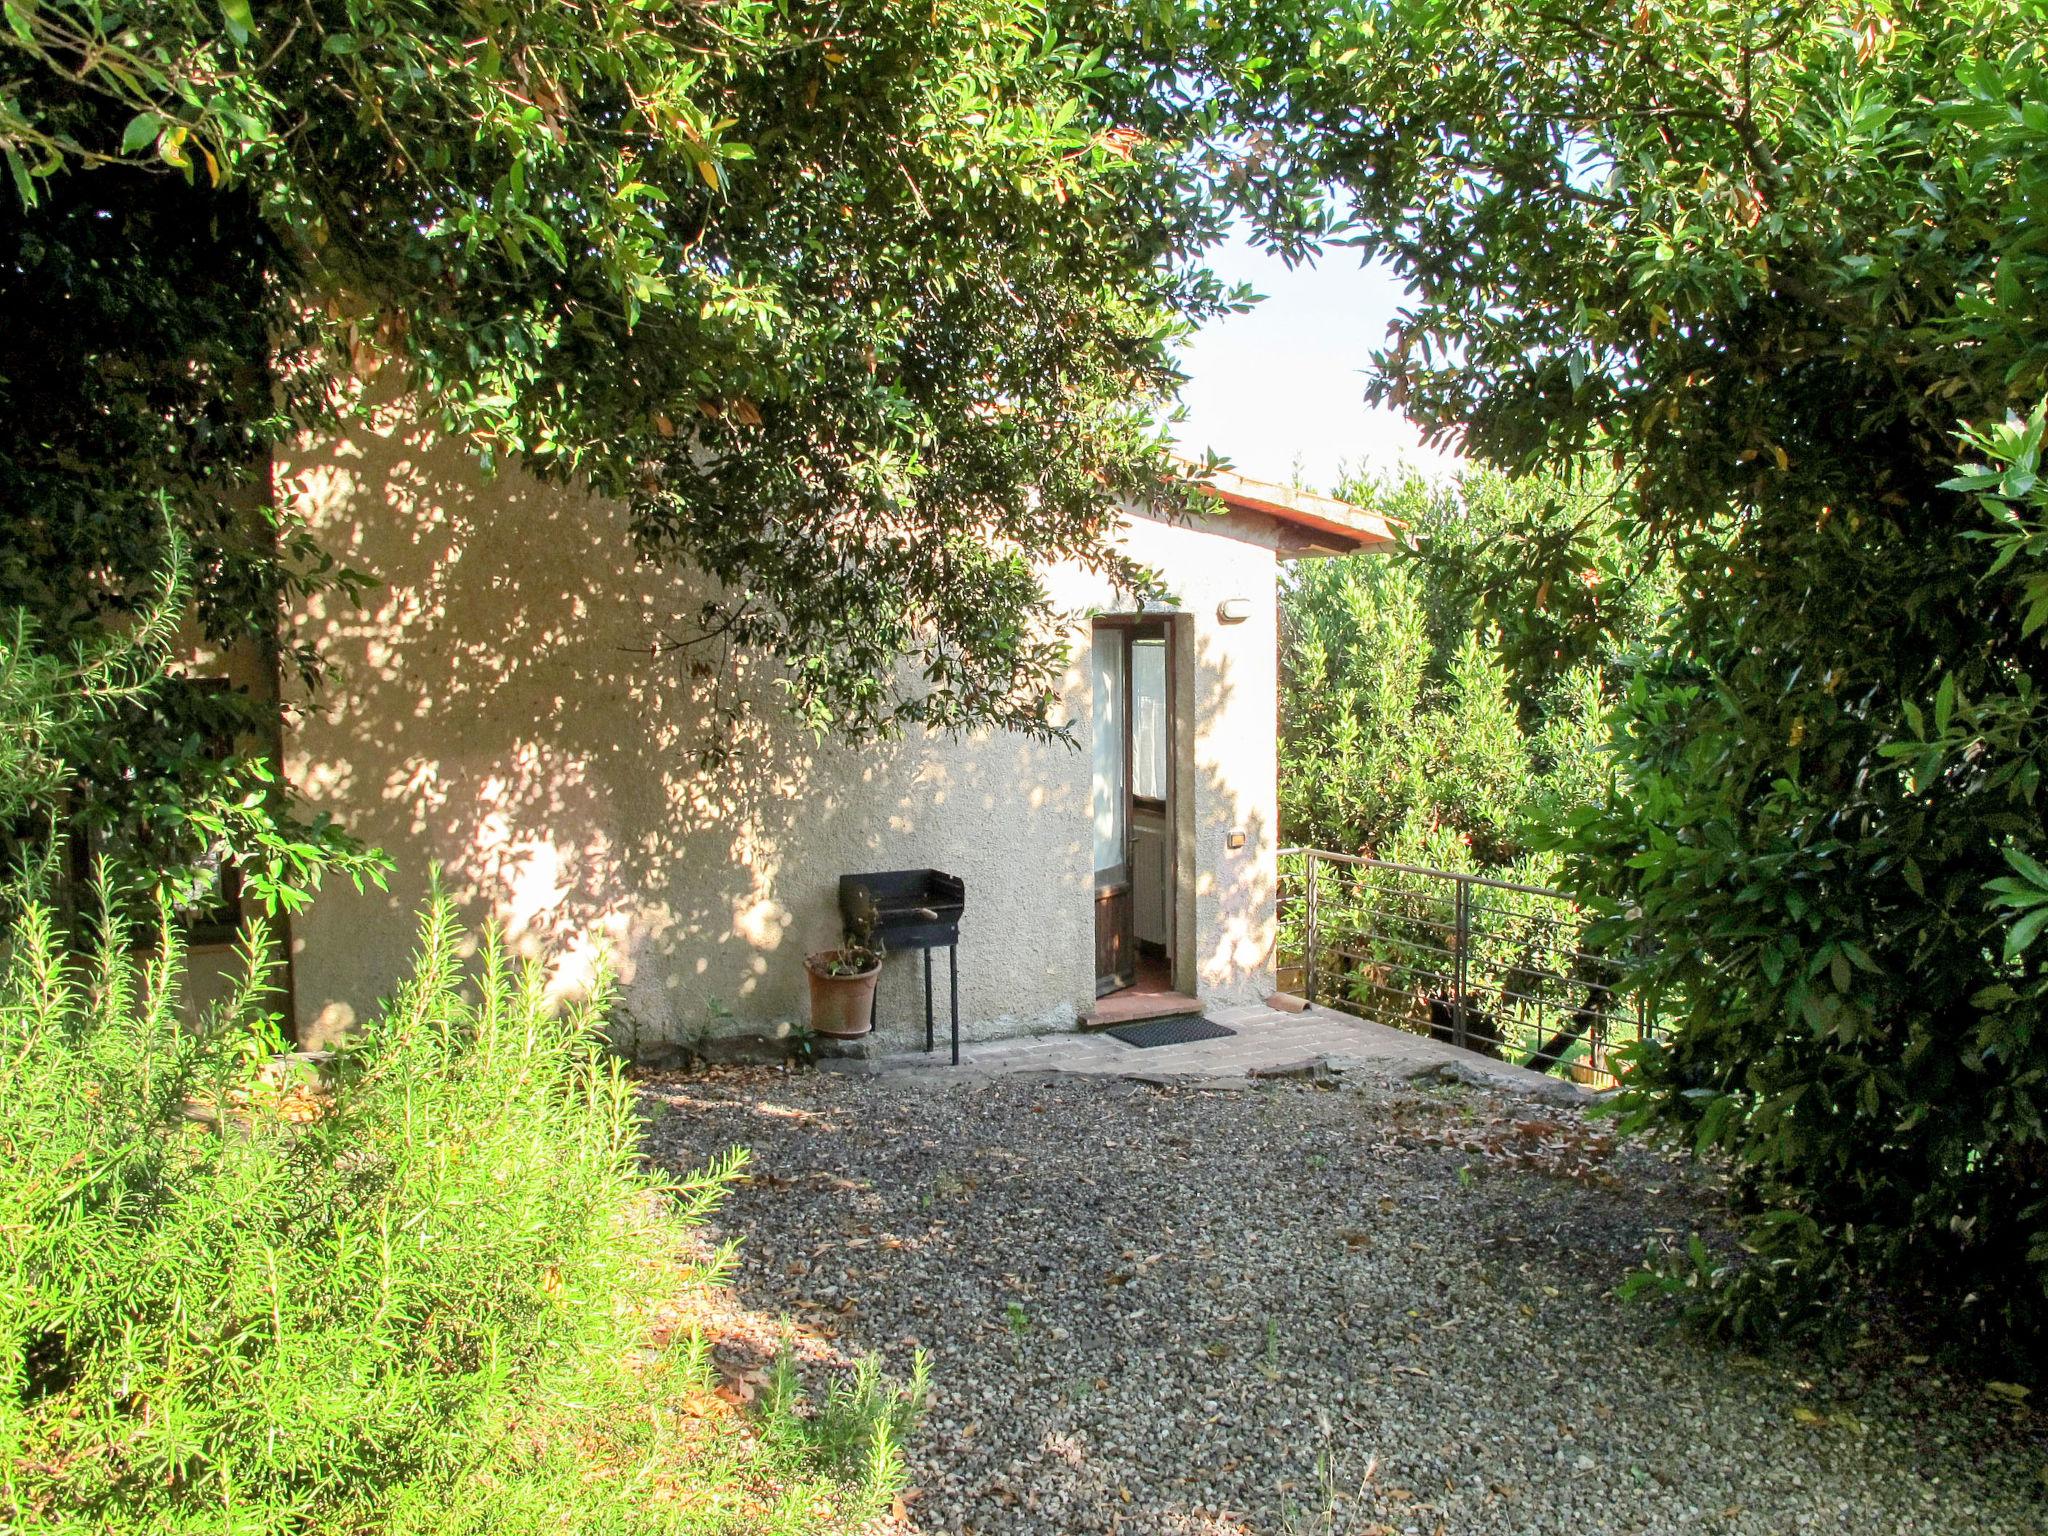 Foto 8 - Casa con 4 camere da letto a San Gimignano con piscina e giardino